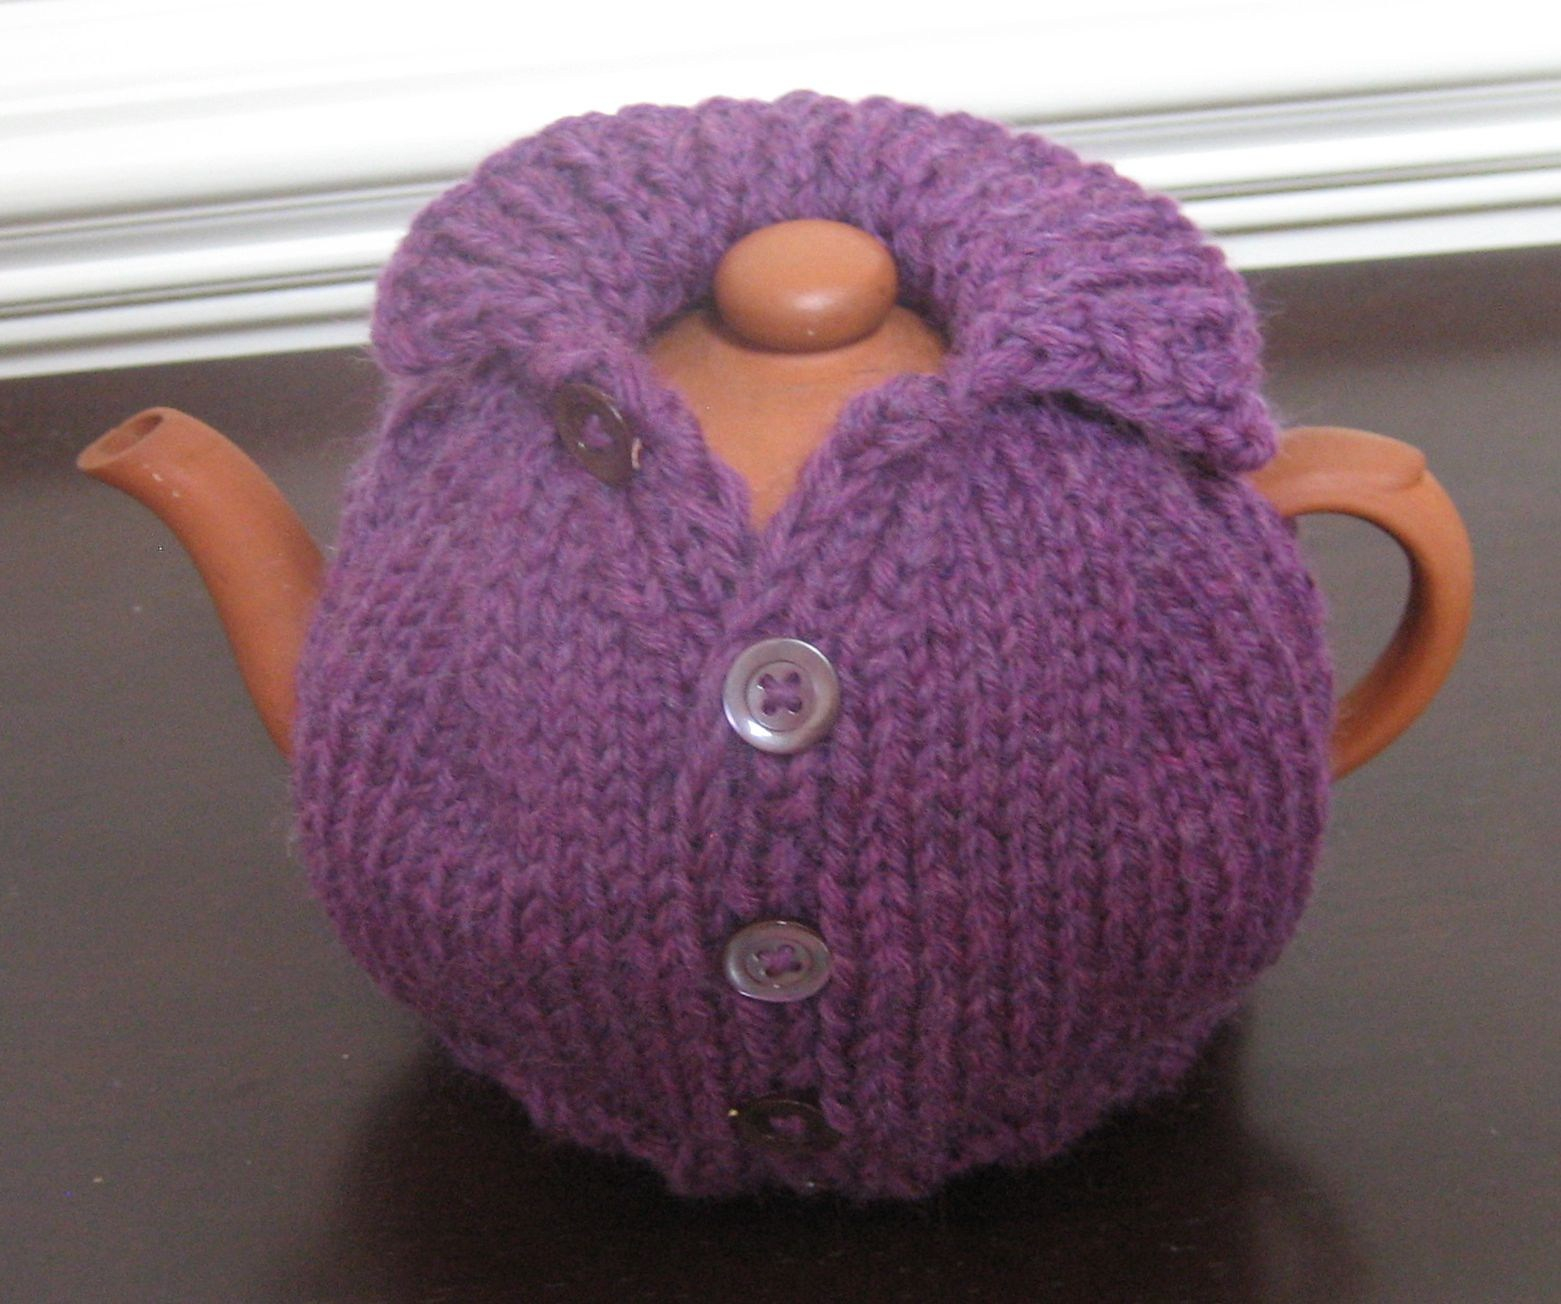 Tea Cosy Knitting Patterns Easy A Few Tea Cozy Knitting Patterns Crochet And Knitting Patterns 2019